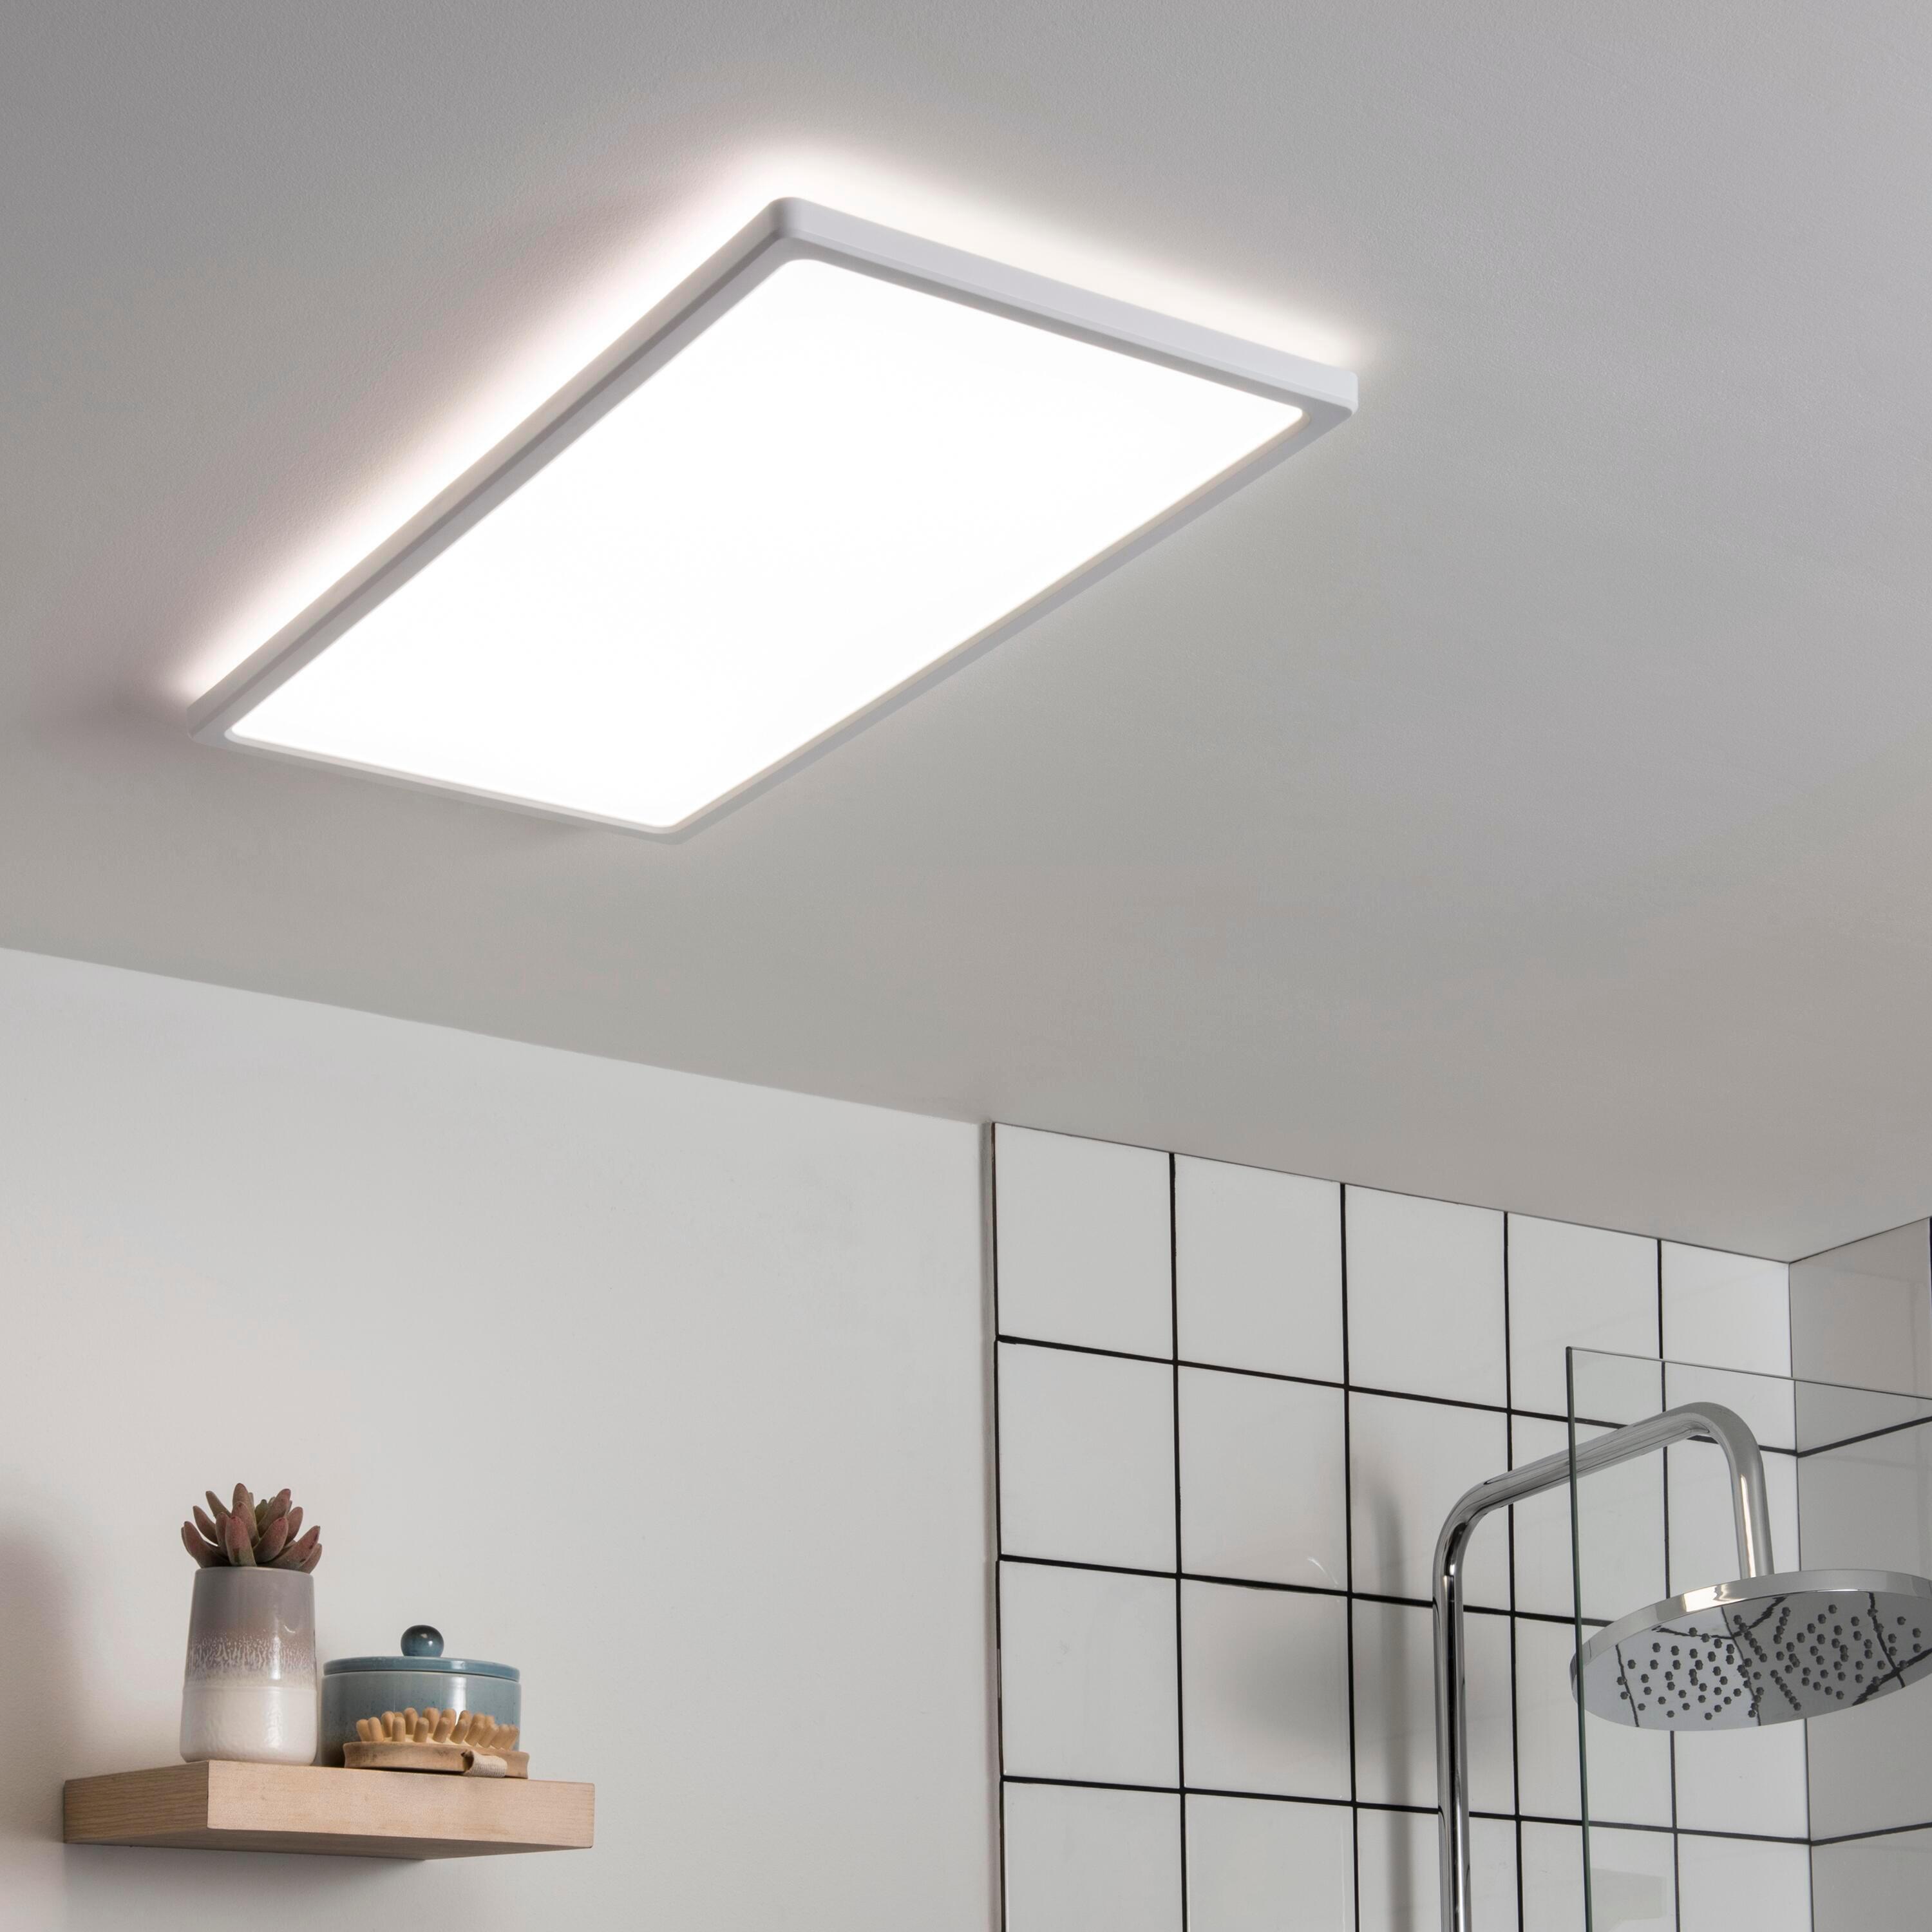 Panneau LED salle de bain Lano, design blanc 59.5 x 29.4cm, blanc